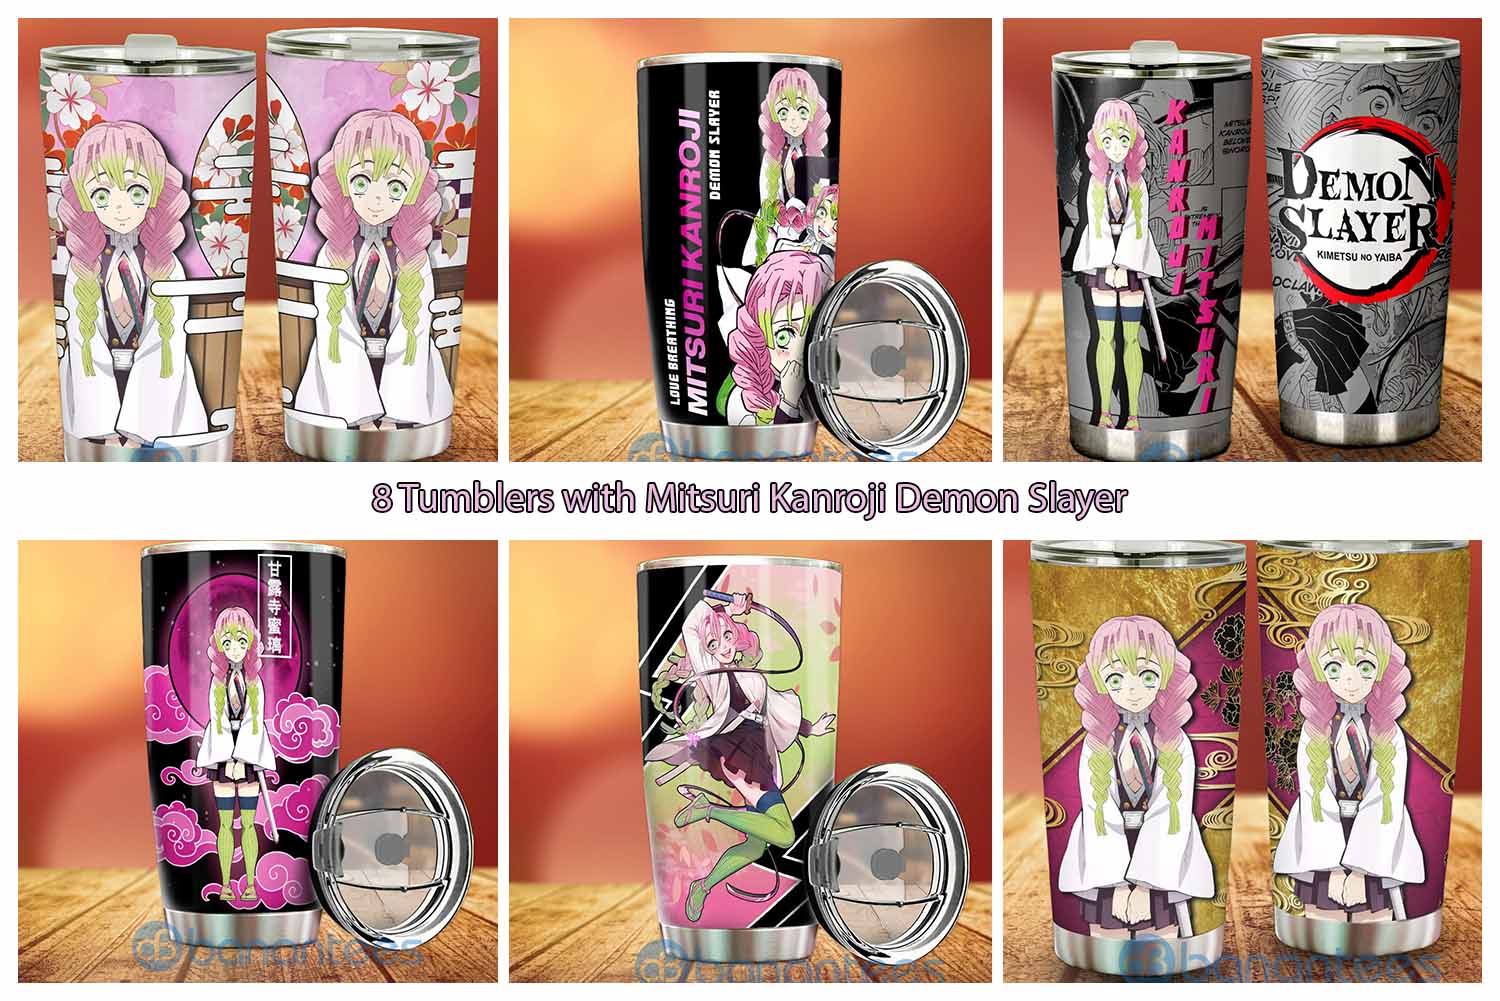 8 Tumblers with Mitsuri Kanroji Demon Slayer